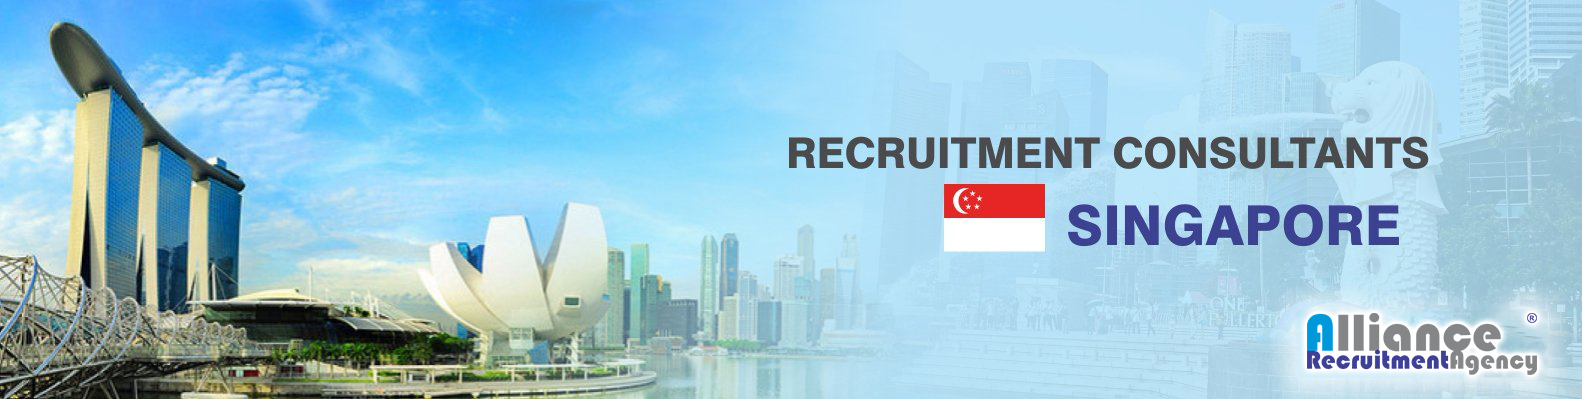 recruitment agency singapore